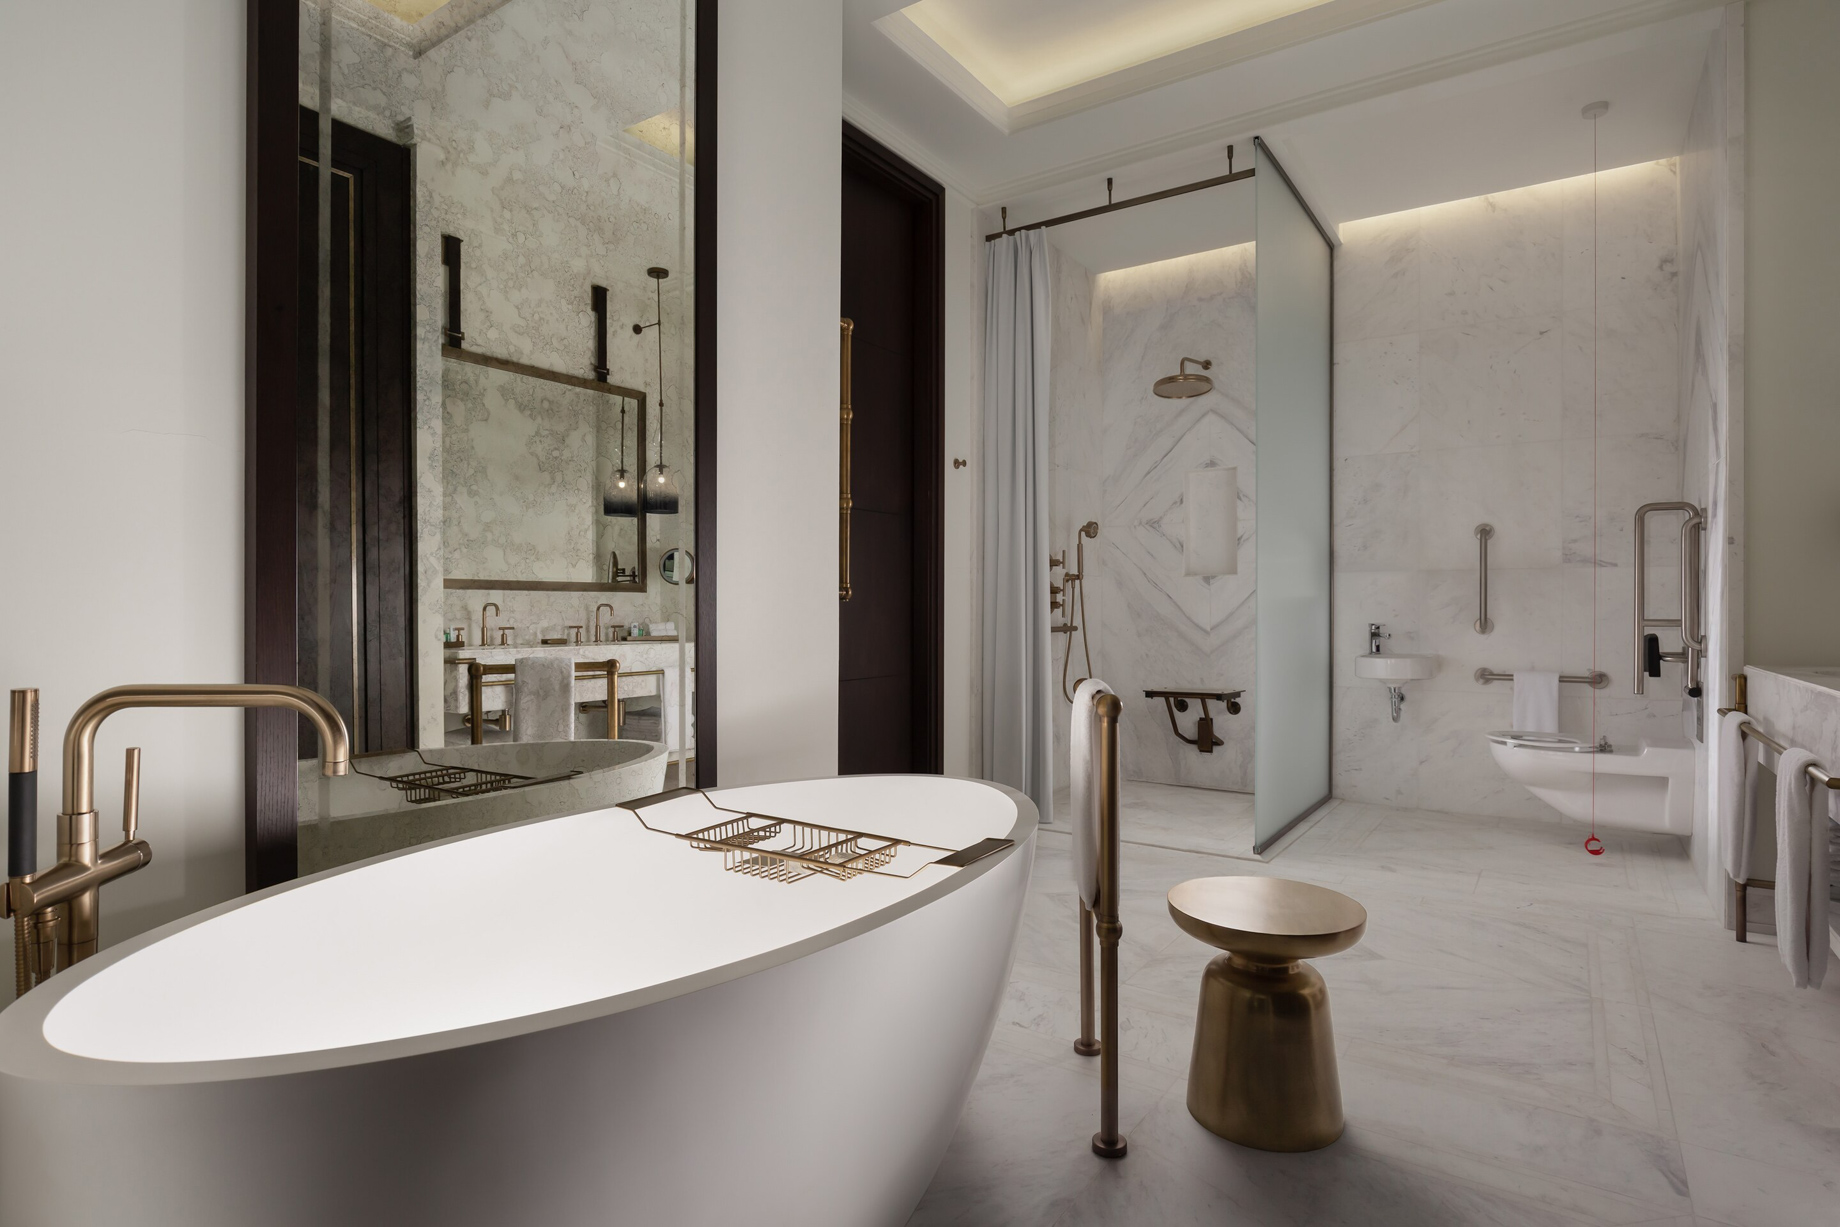 The St. Regis Astana Hotel - Astana, Kazakhstan - Accessible Bathroom Tub and Shower